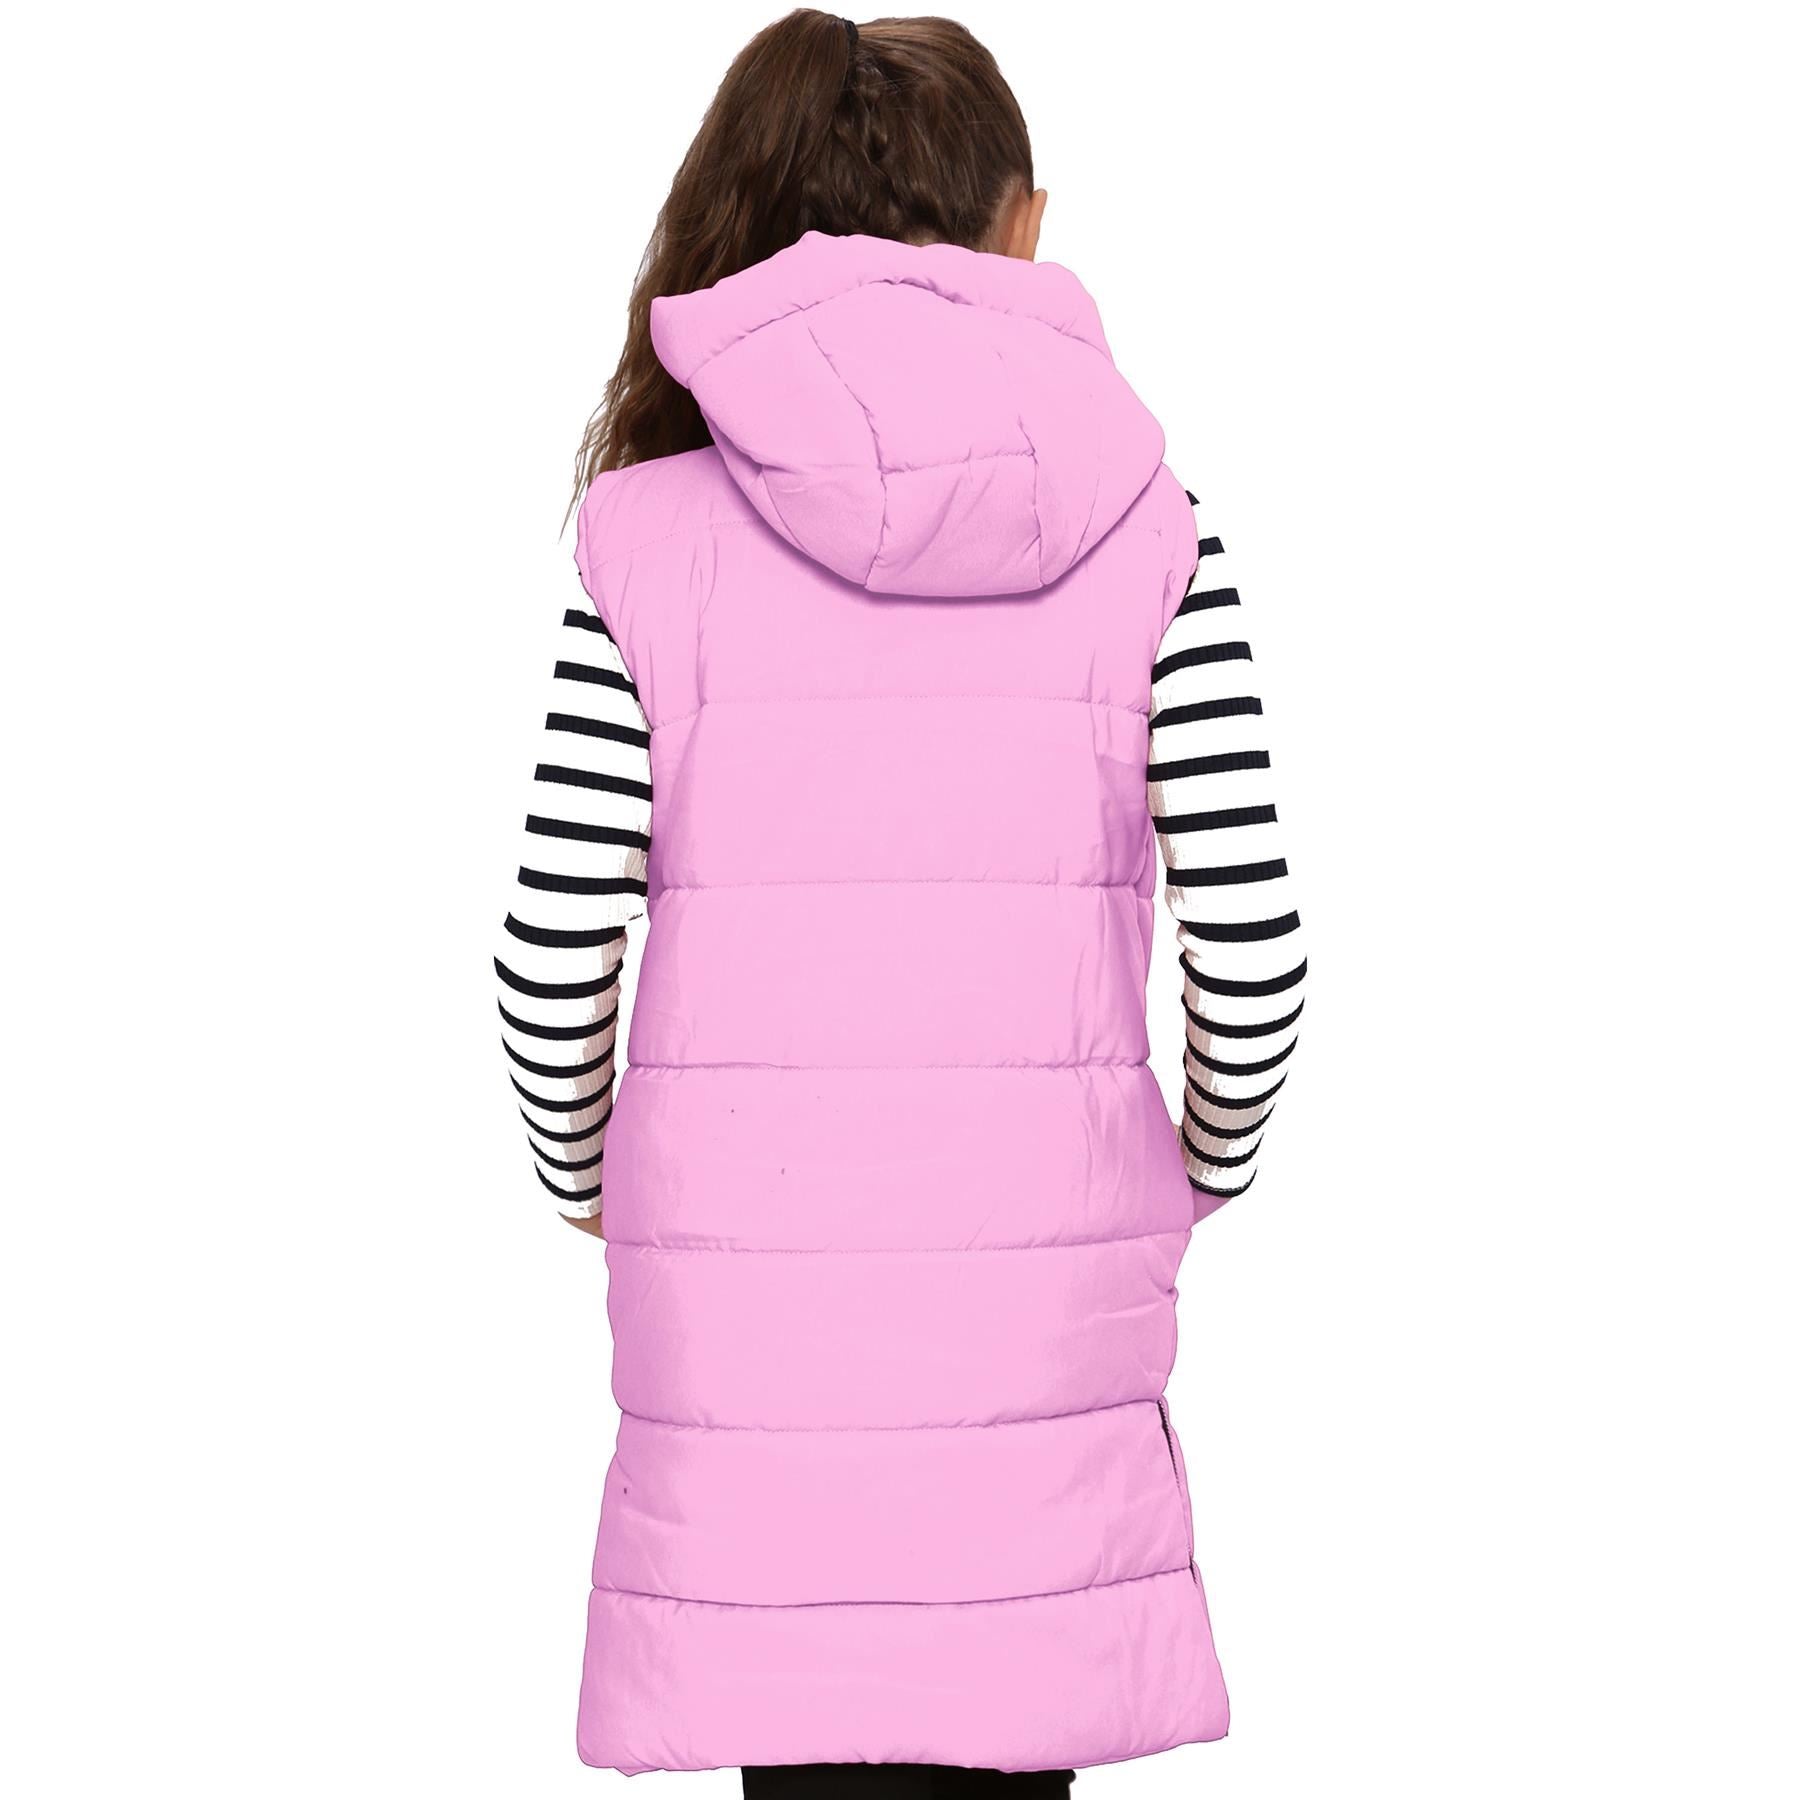 Girls Oversized Pink Gilet Long Line Style Jacket